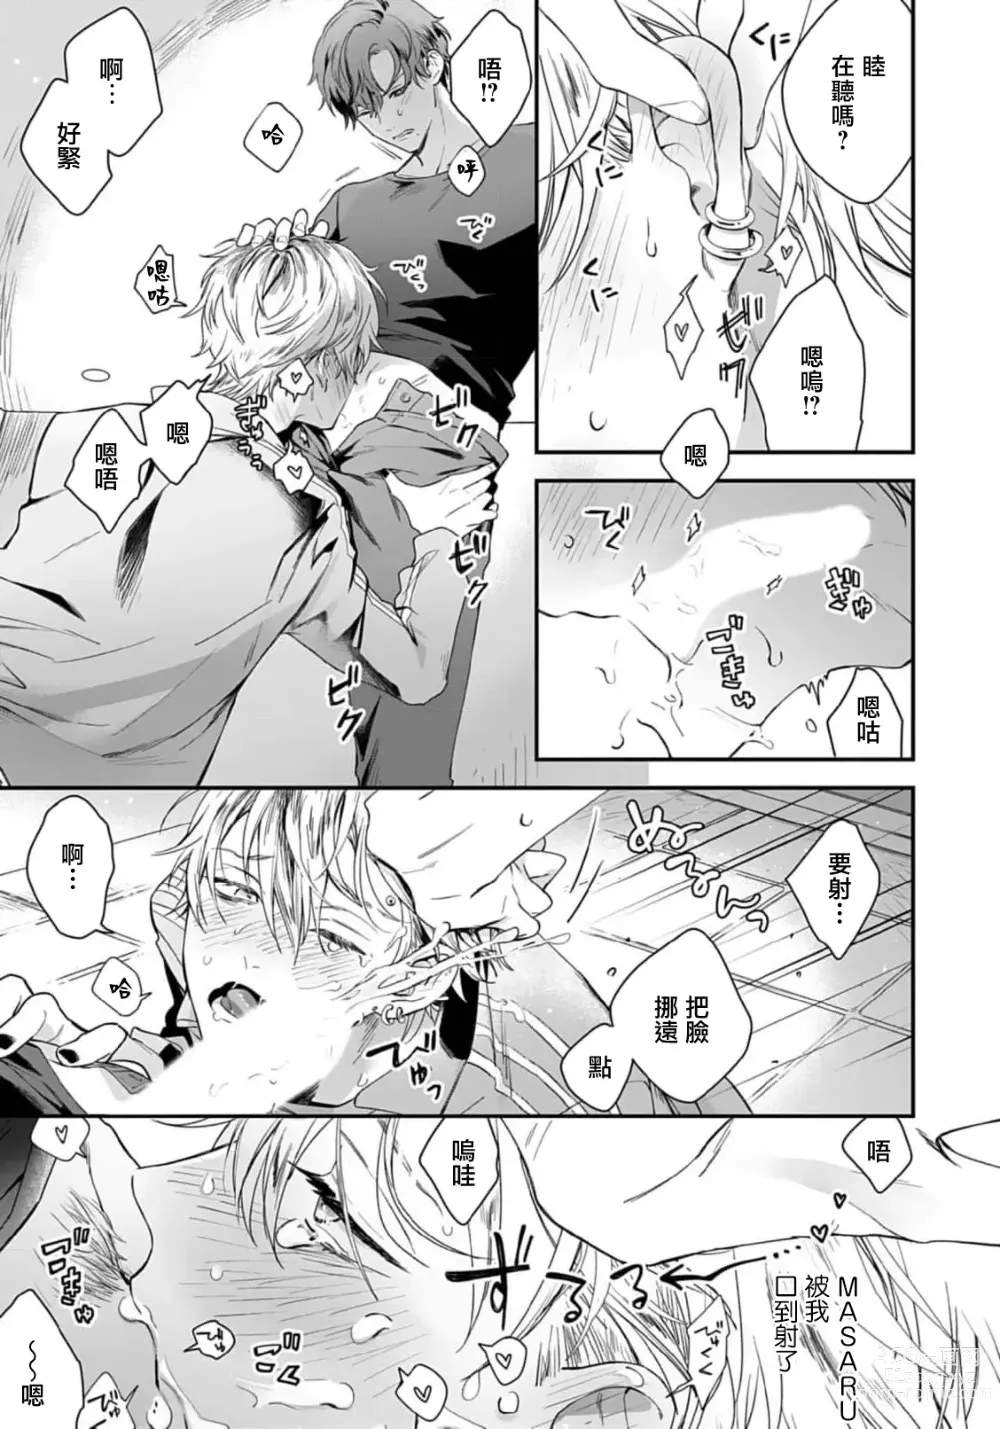 Page 21 of manga 他的声音在我听来完全就是爱之歌 1-3